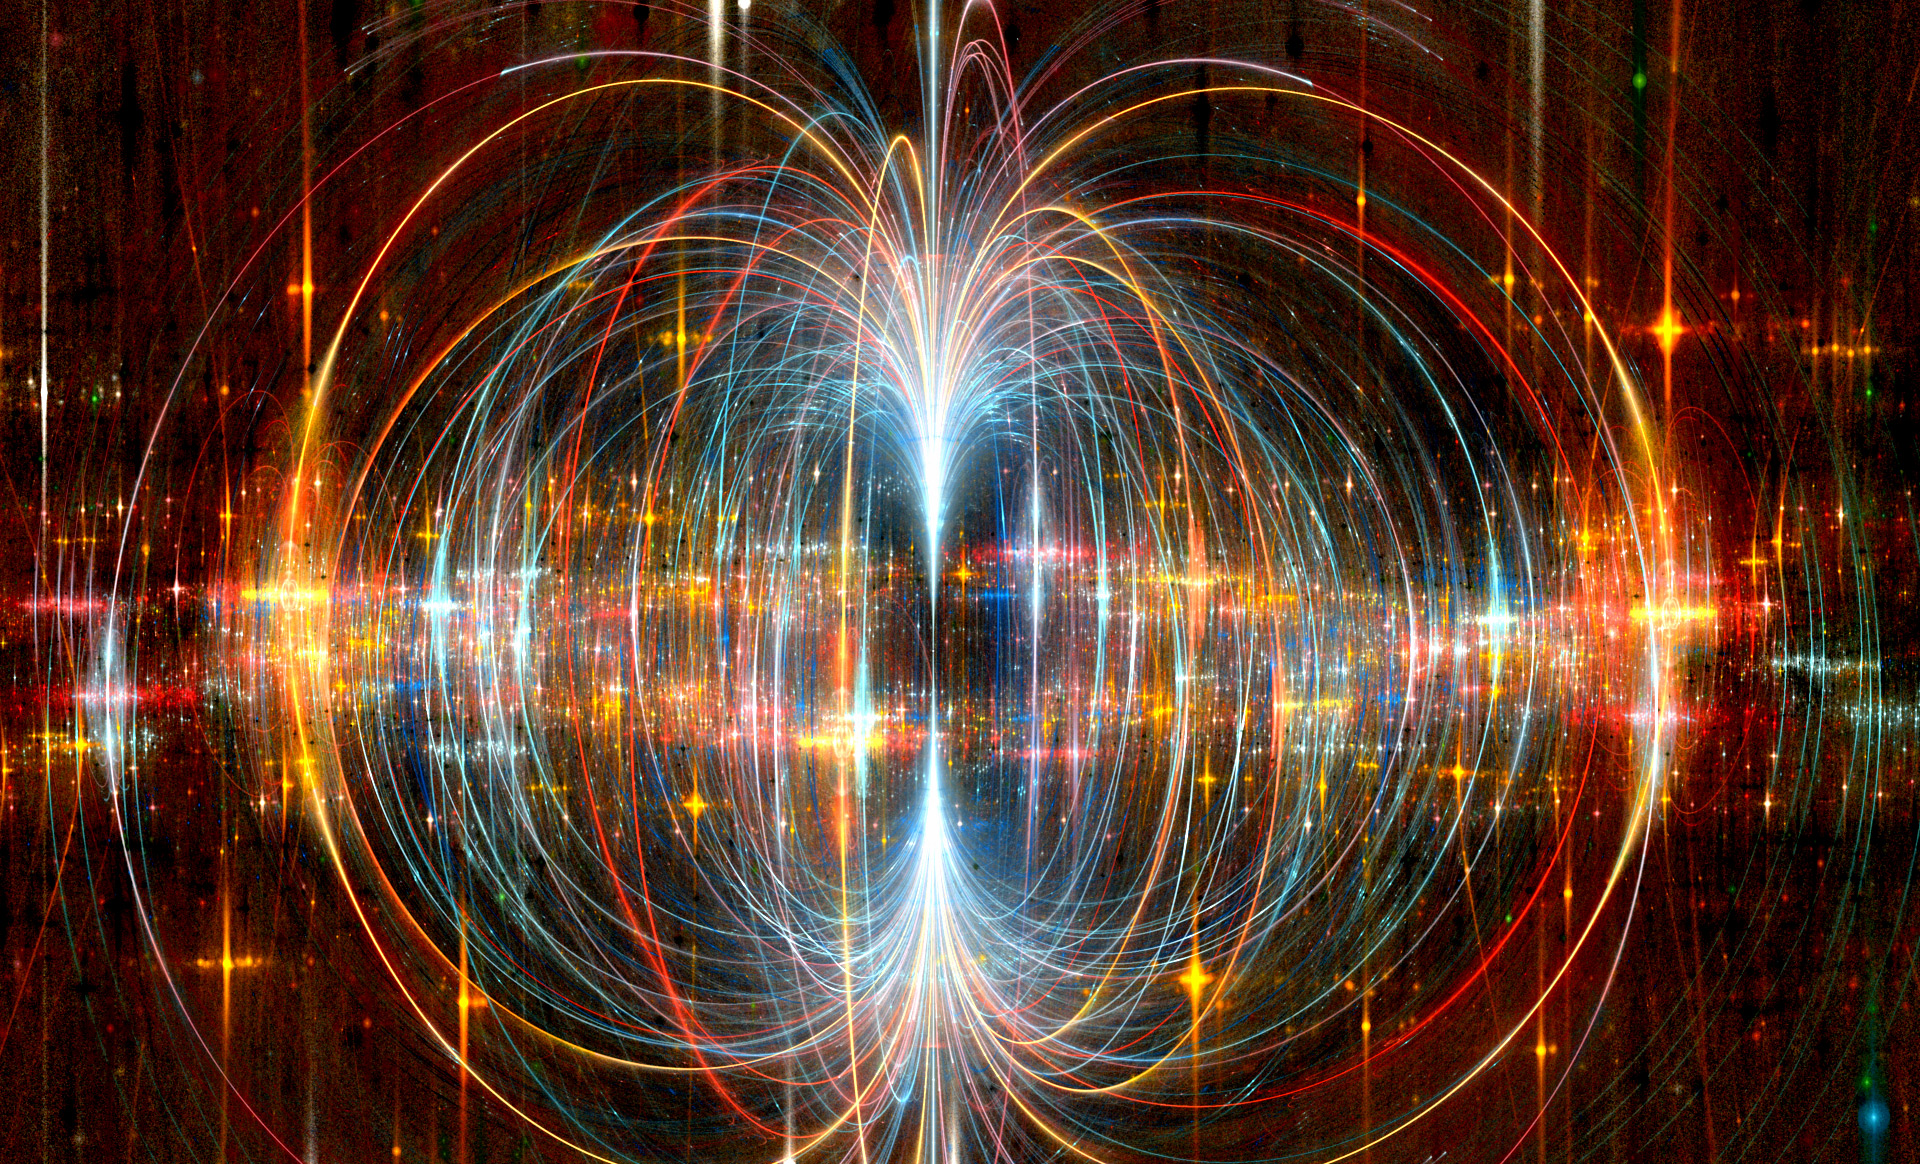 Transcendent Fractal Art ~ High-Resolution Downloads | The Galactic ...